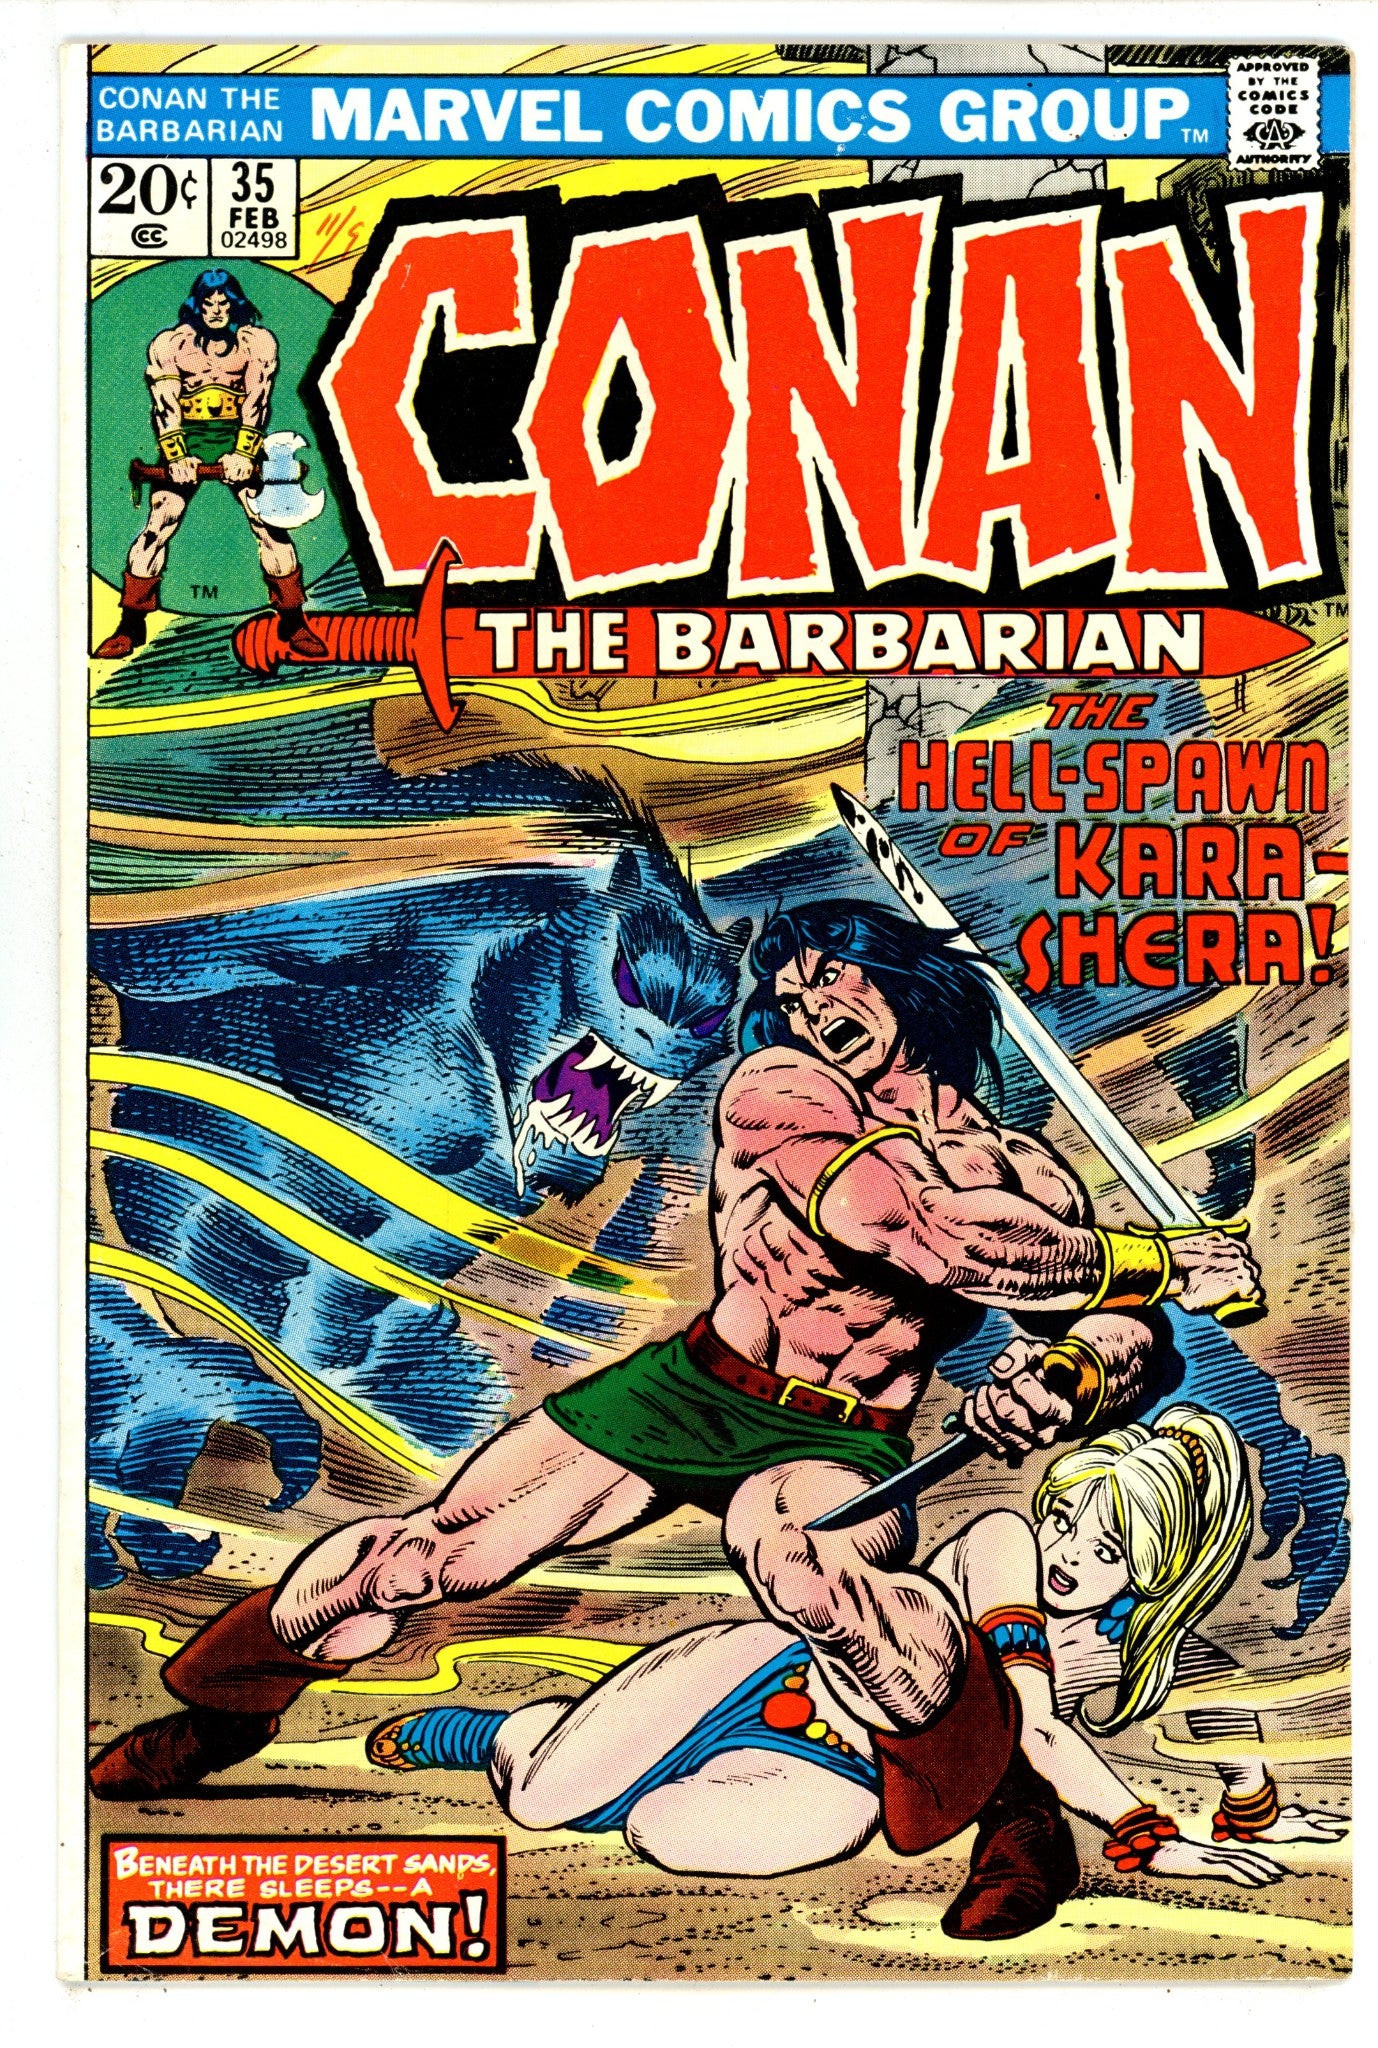 Conan the Barbarian Vol 1 35 VG/FN (5.0) (1974) 